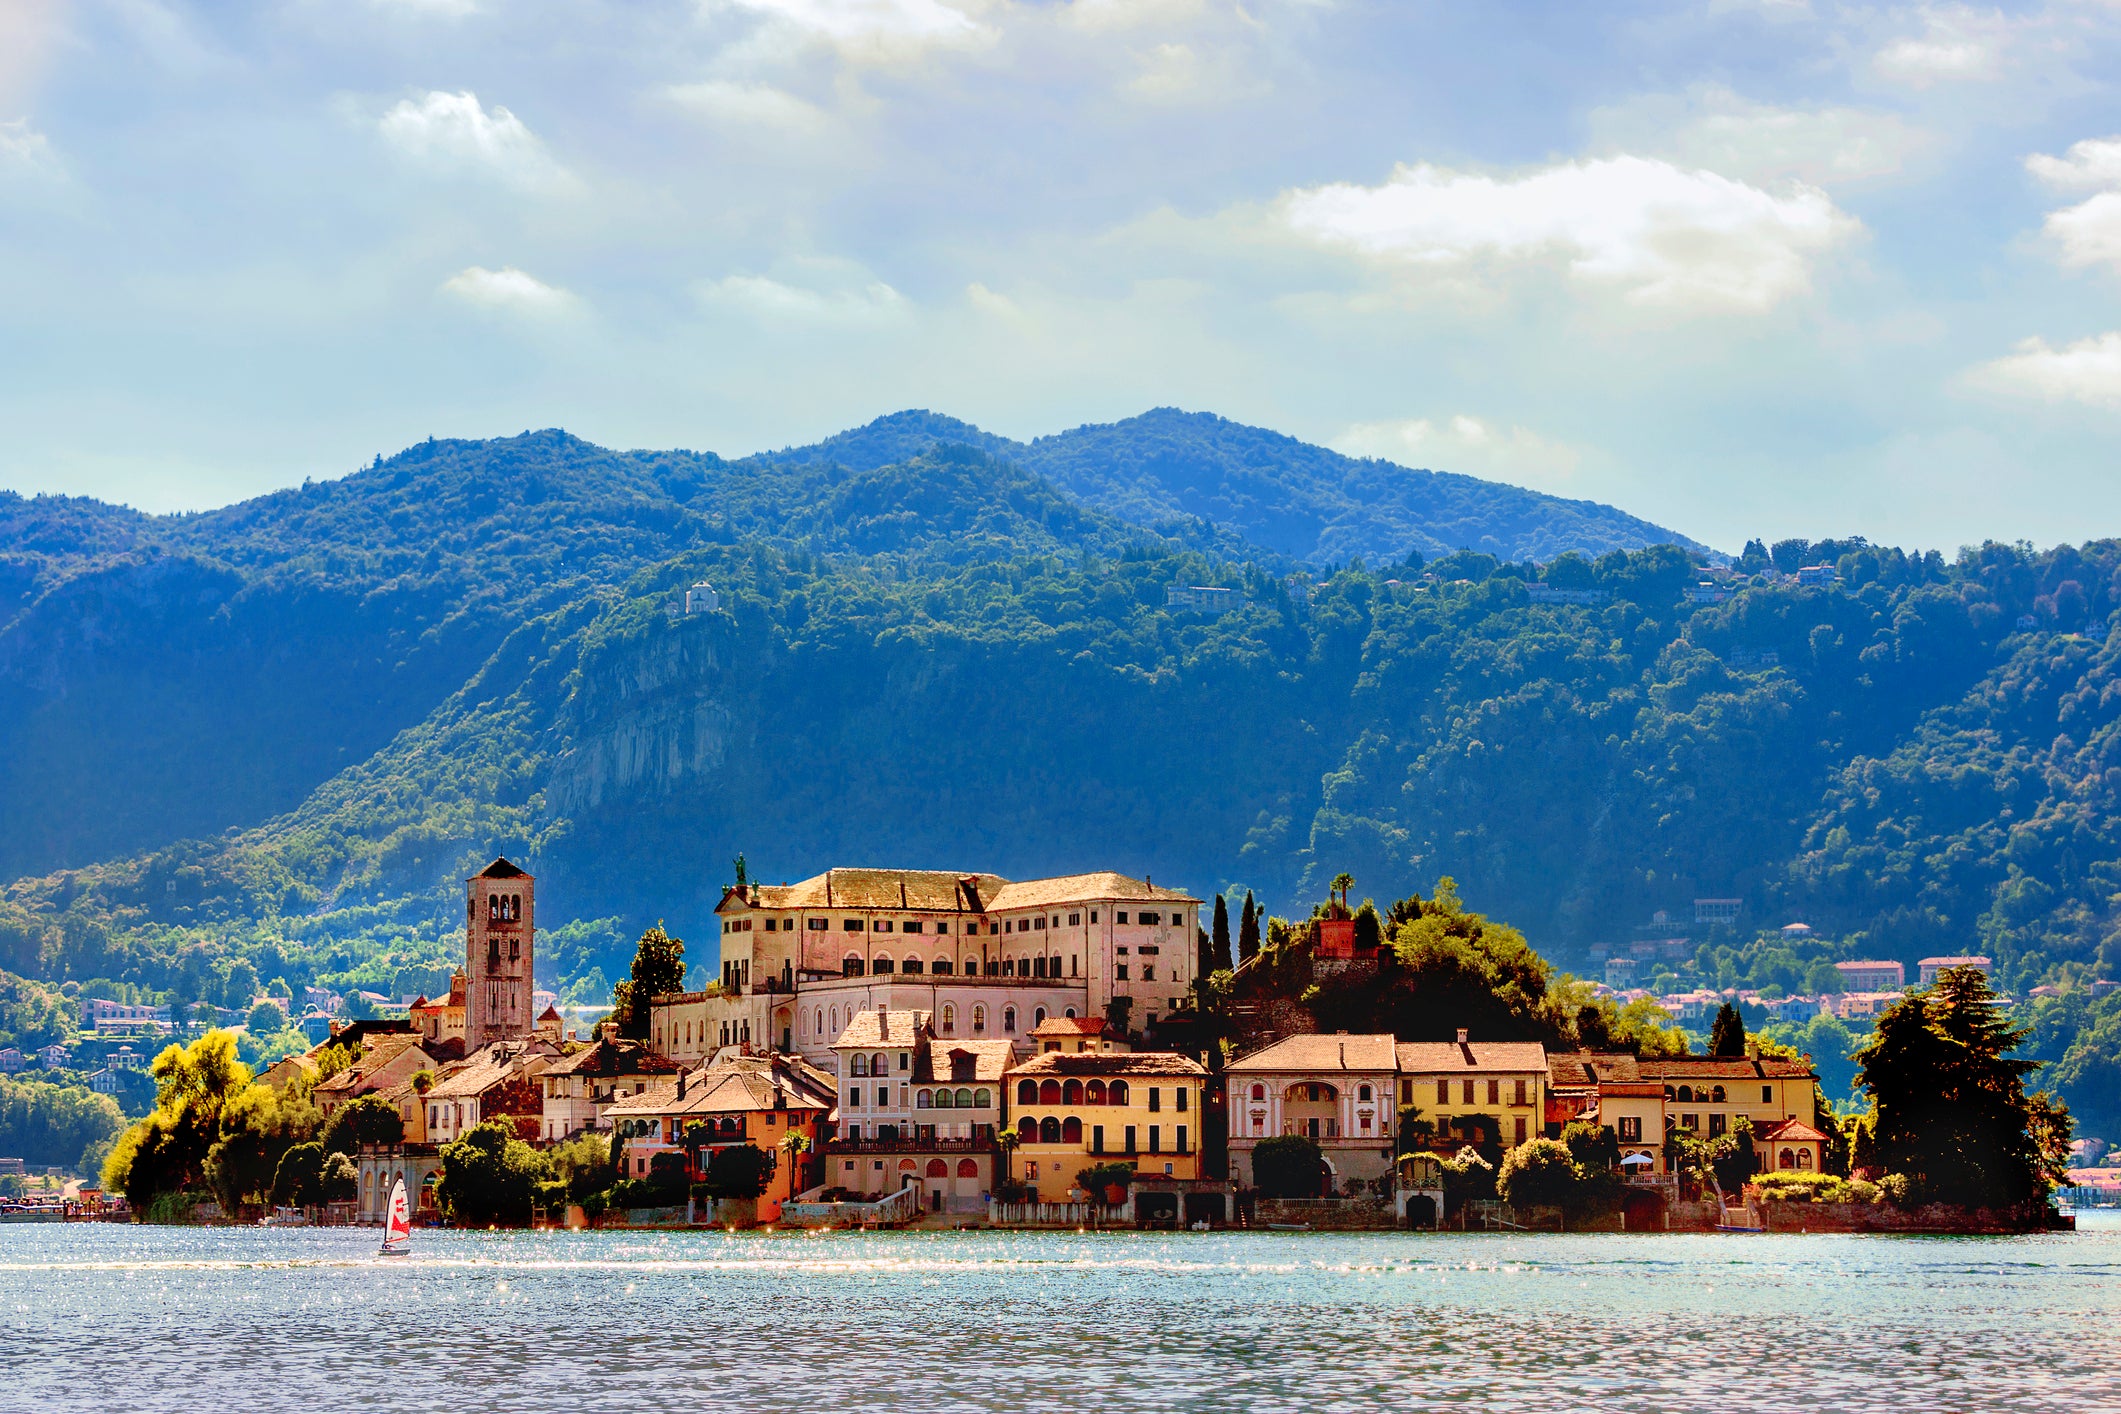 San Giulio on Lake Orta, Italy